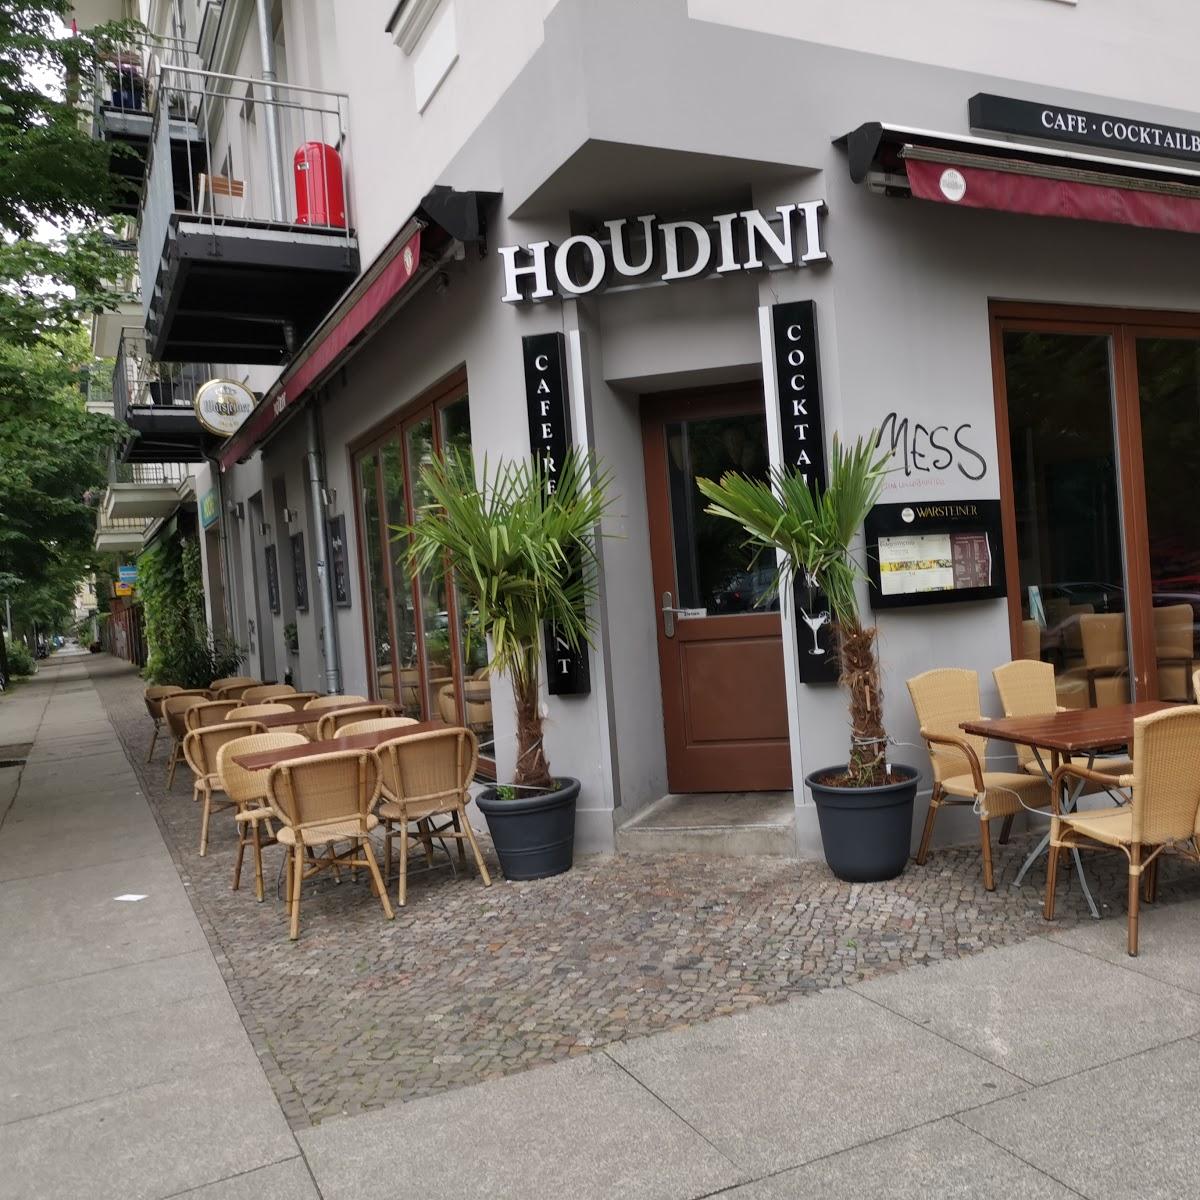 Restaurant "Restaurant-Café-Bar Houdini" in Berlin